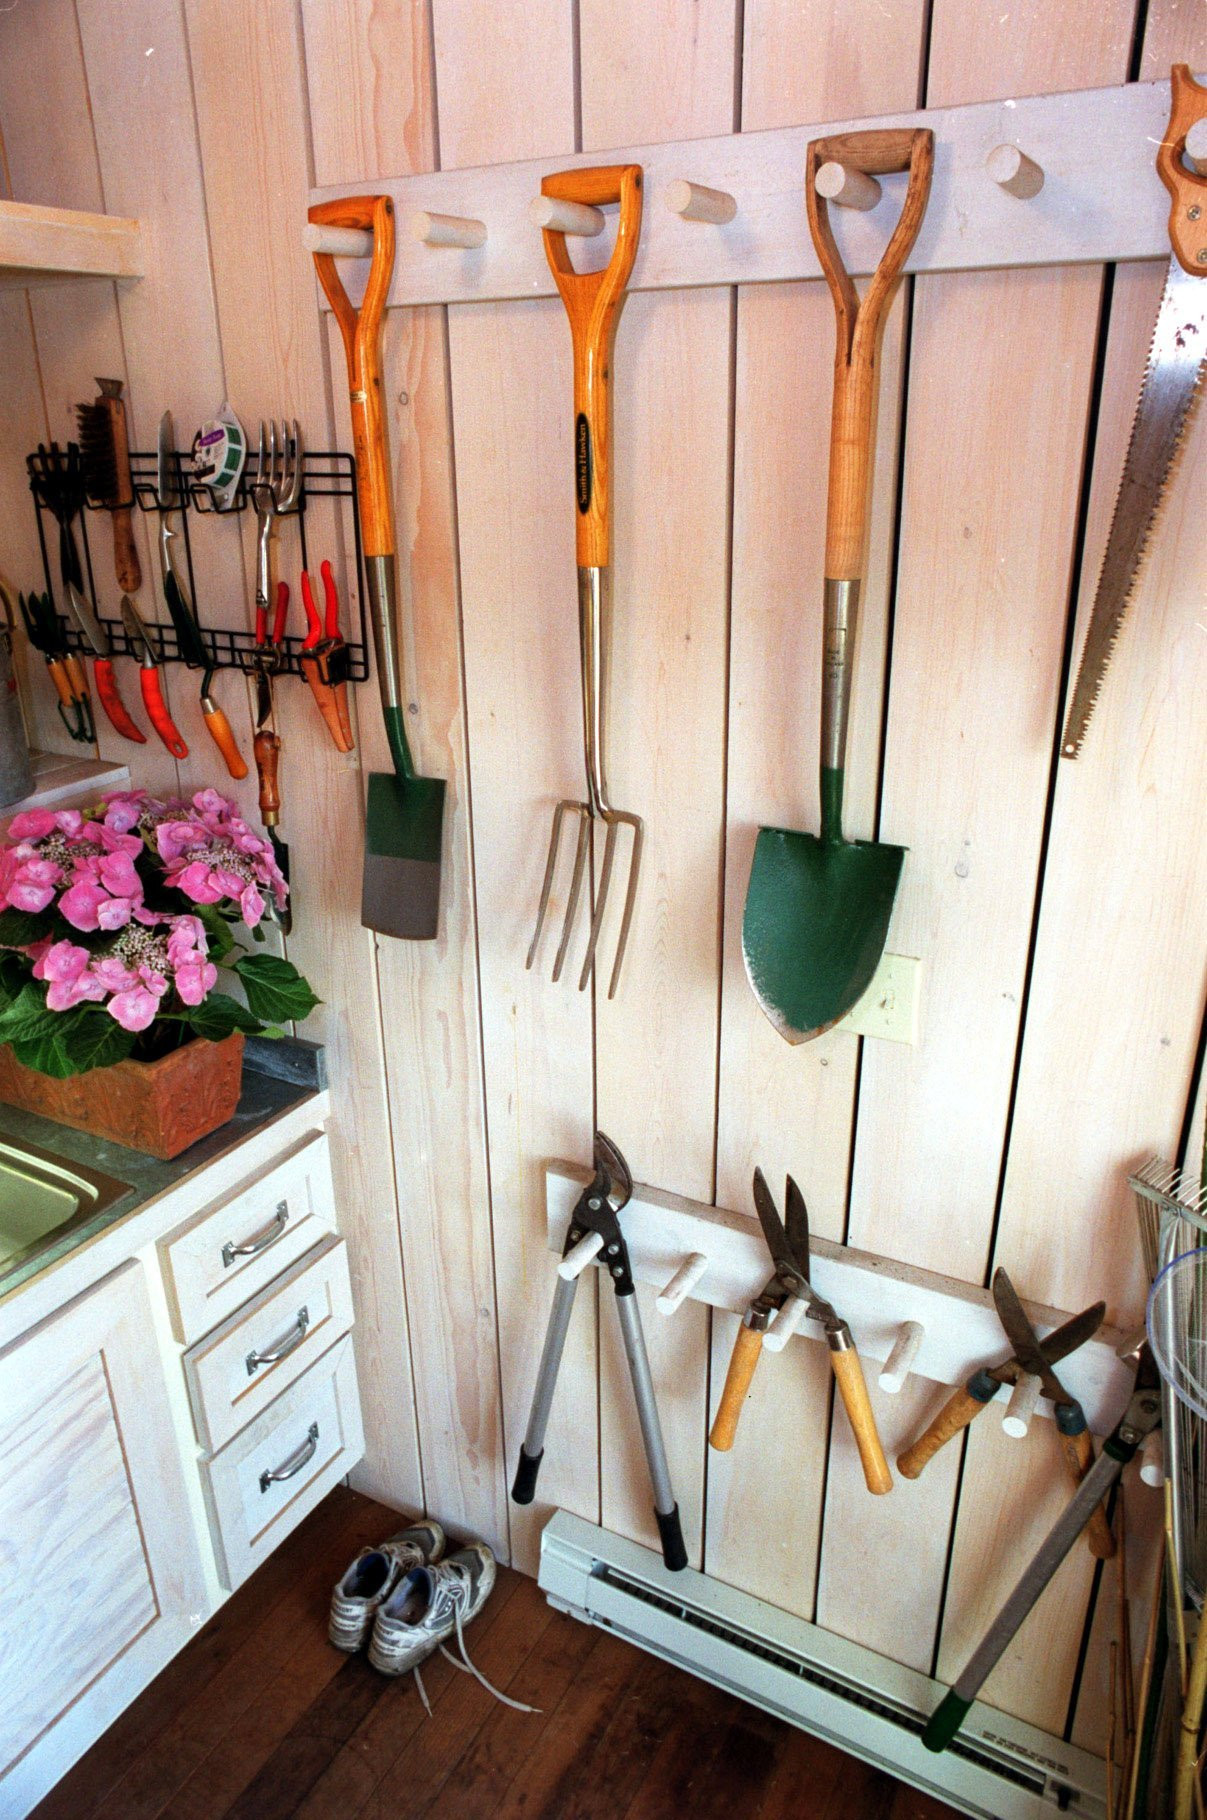 Best ideas about Garage Tool Organizer DIY
. Save or Pin 12 tips for DIY garage organization Now.